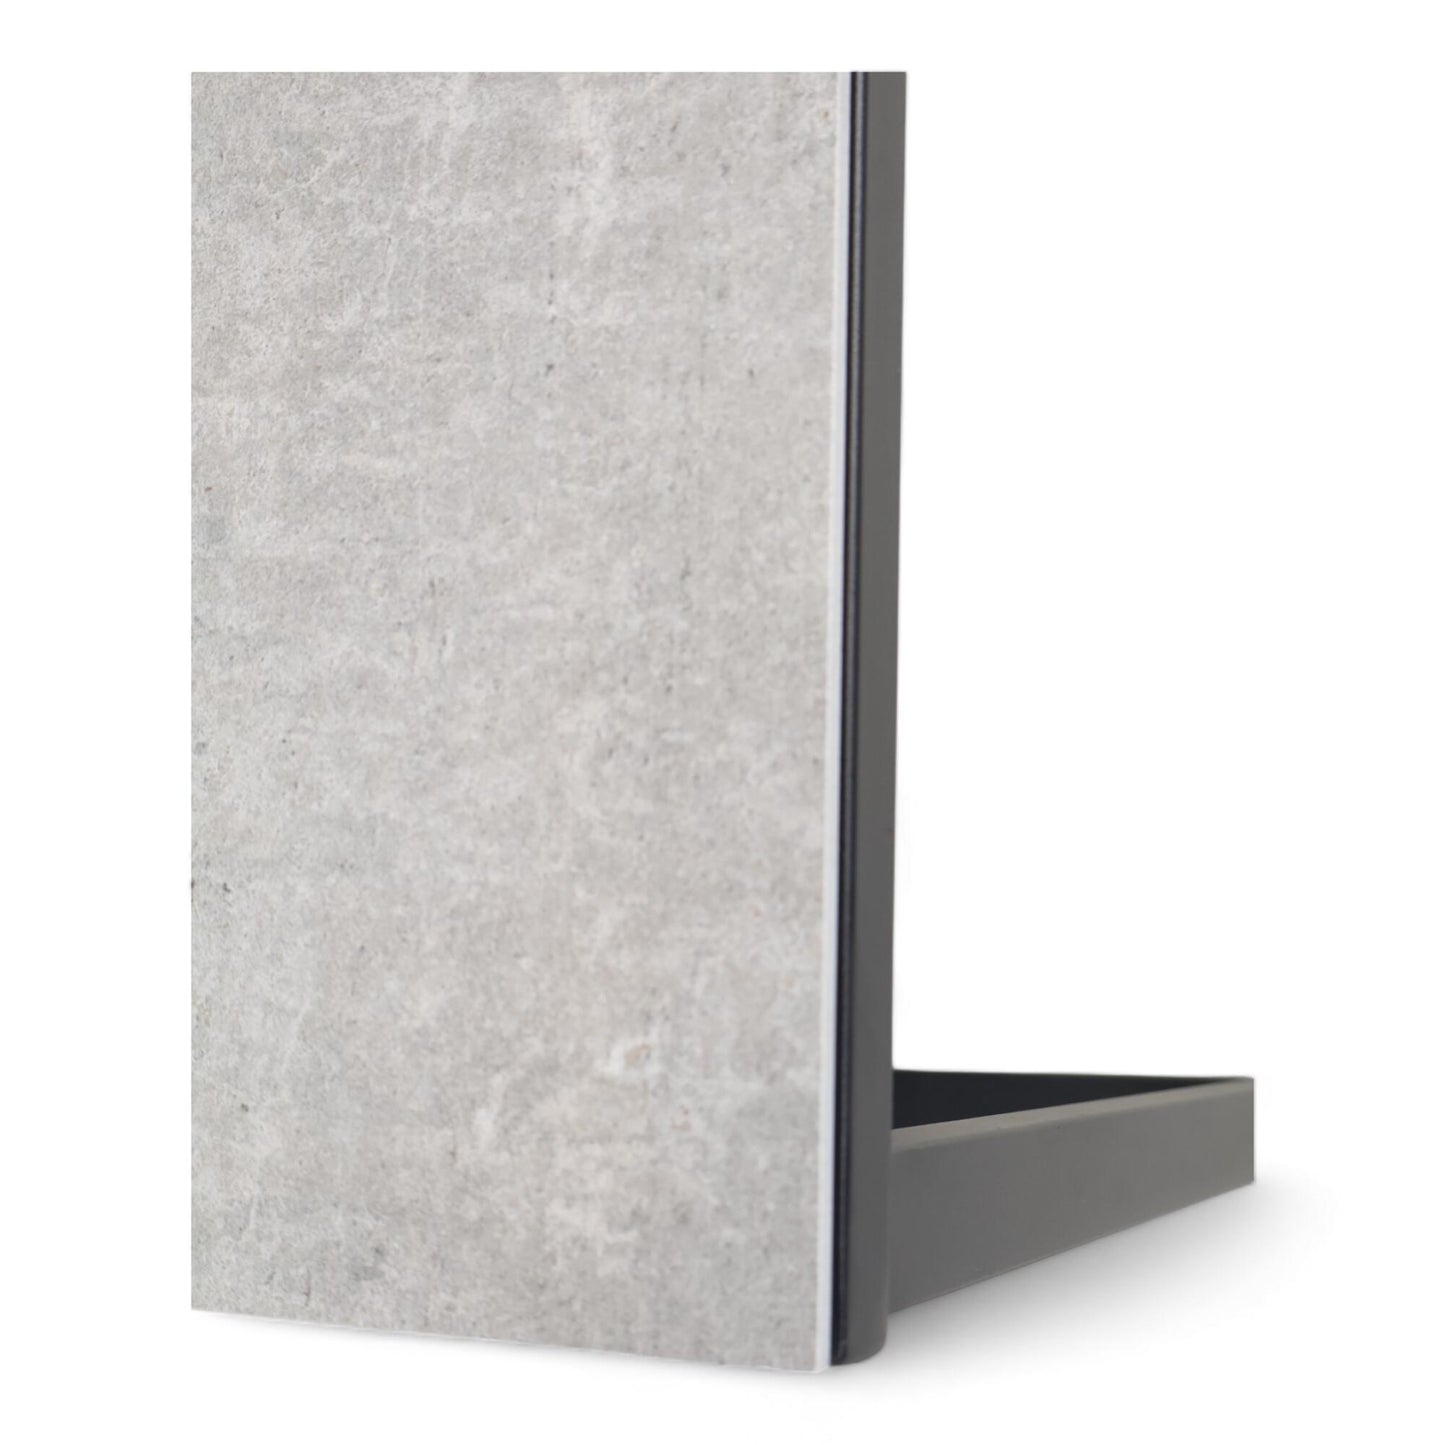 Nyrenset | Brafab Talance Sofabord, betonglook grå plate, Sorte ben, 80x80